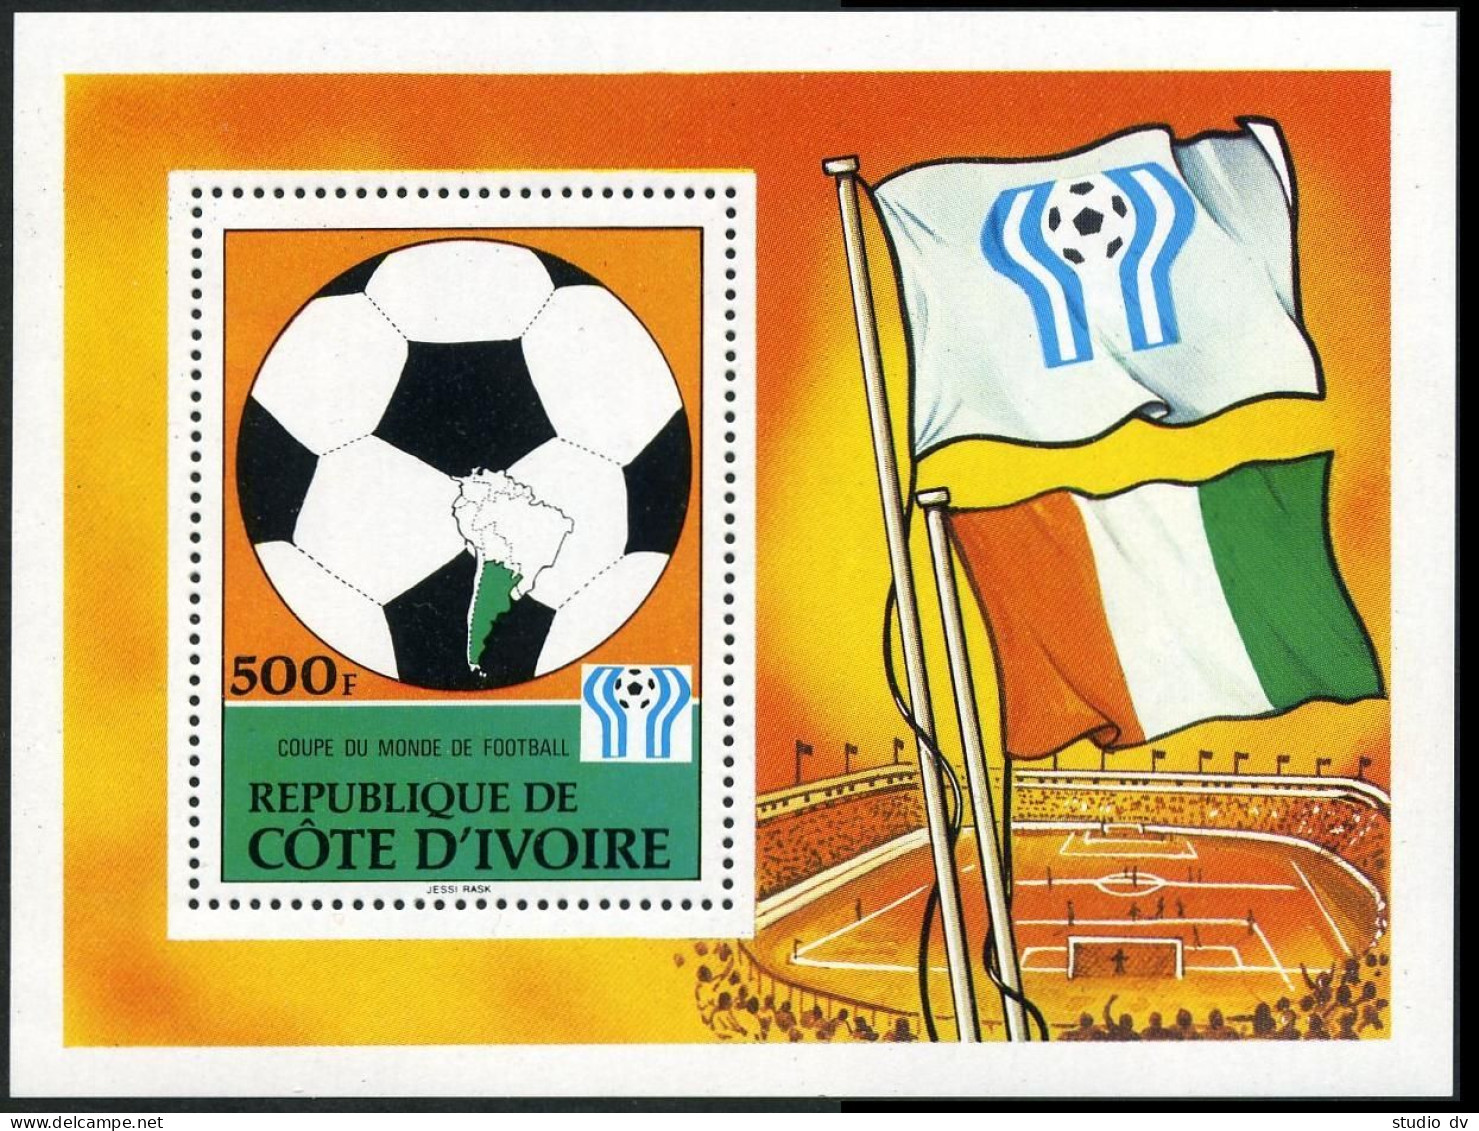 Ivory Coast 466-470,471,MNH.Mi 552-556,Bl.12. World Soccer Cup Argentina-1978. - Côte D'Ivoire (1960-...)